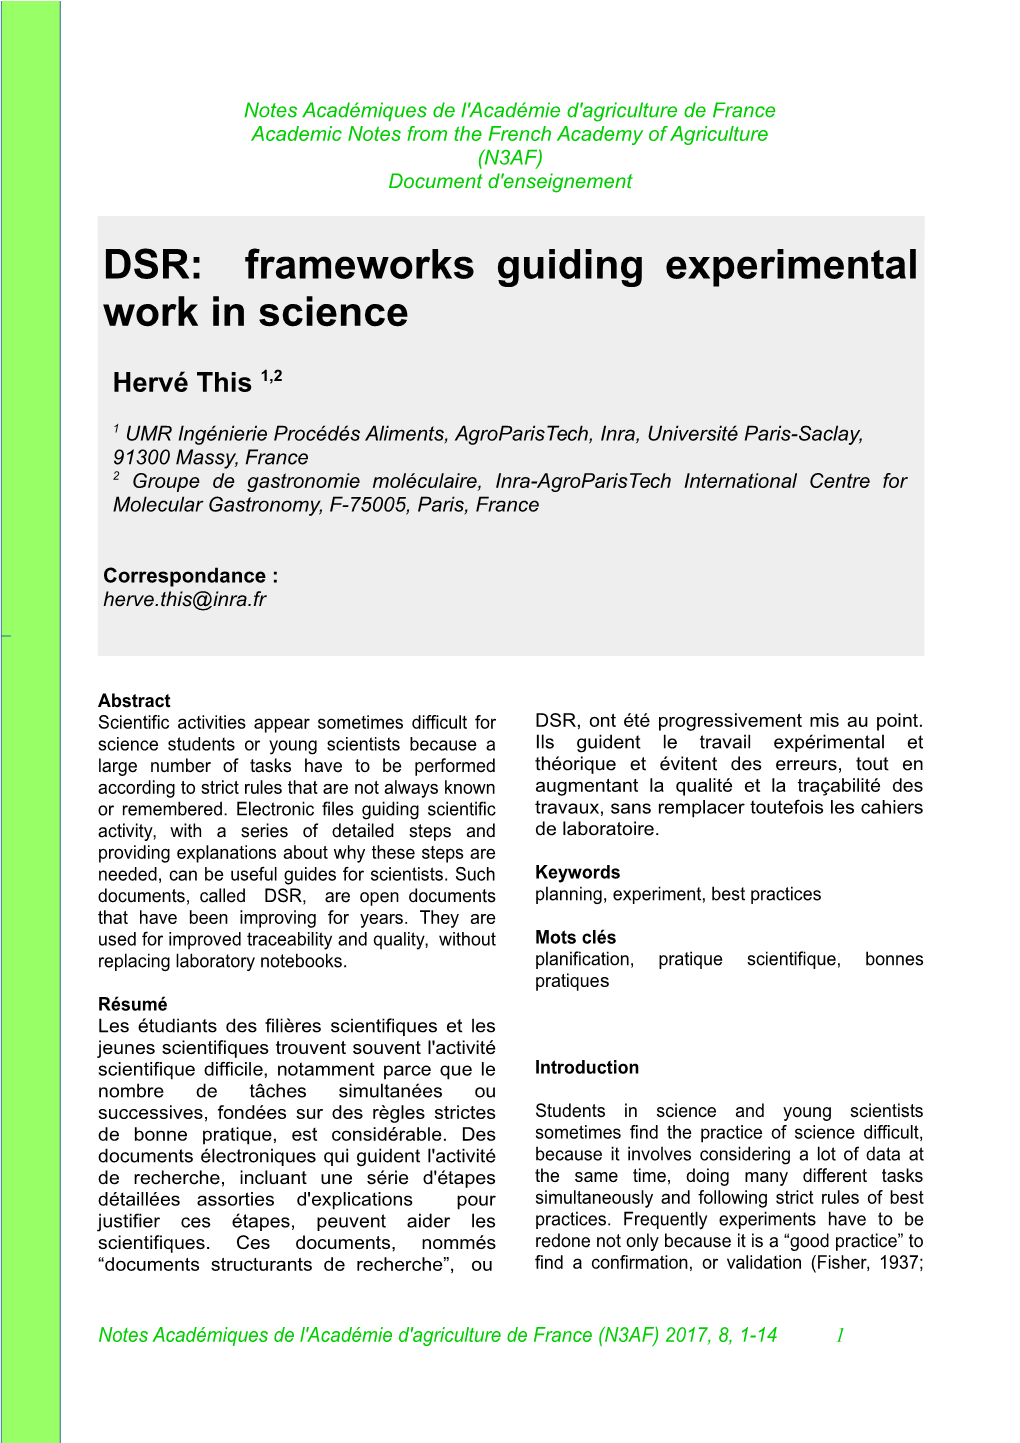 DSR: Frameworks Guiding Experimental Work in Science